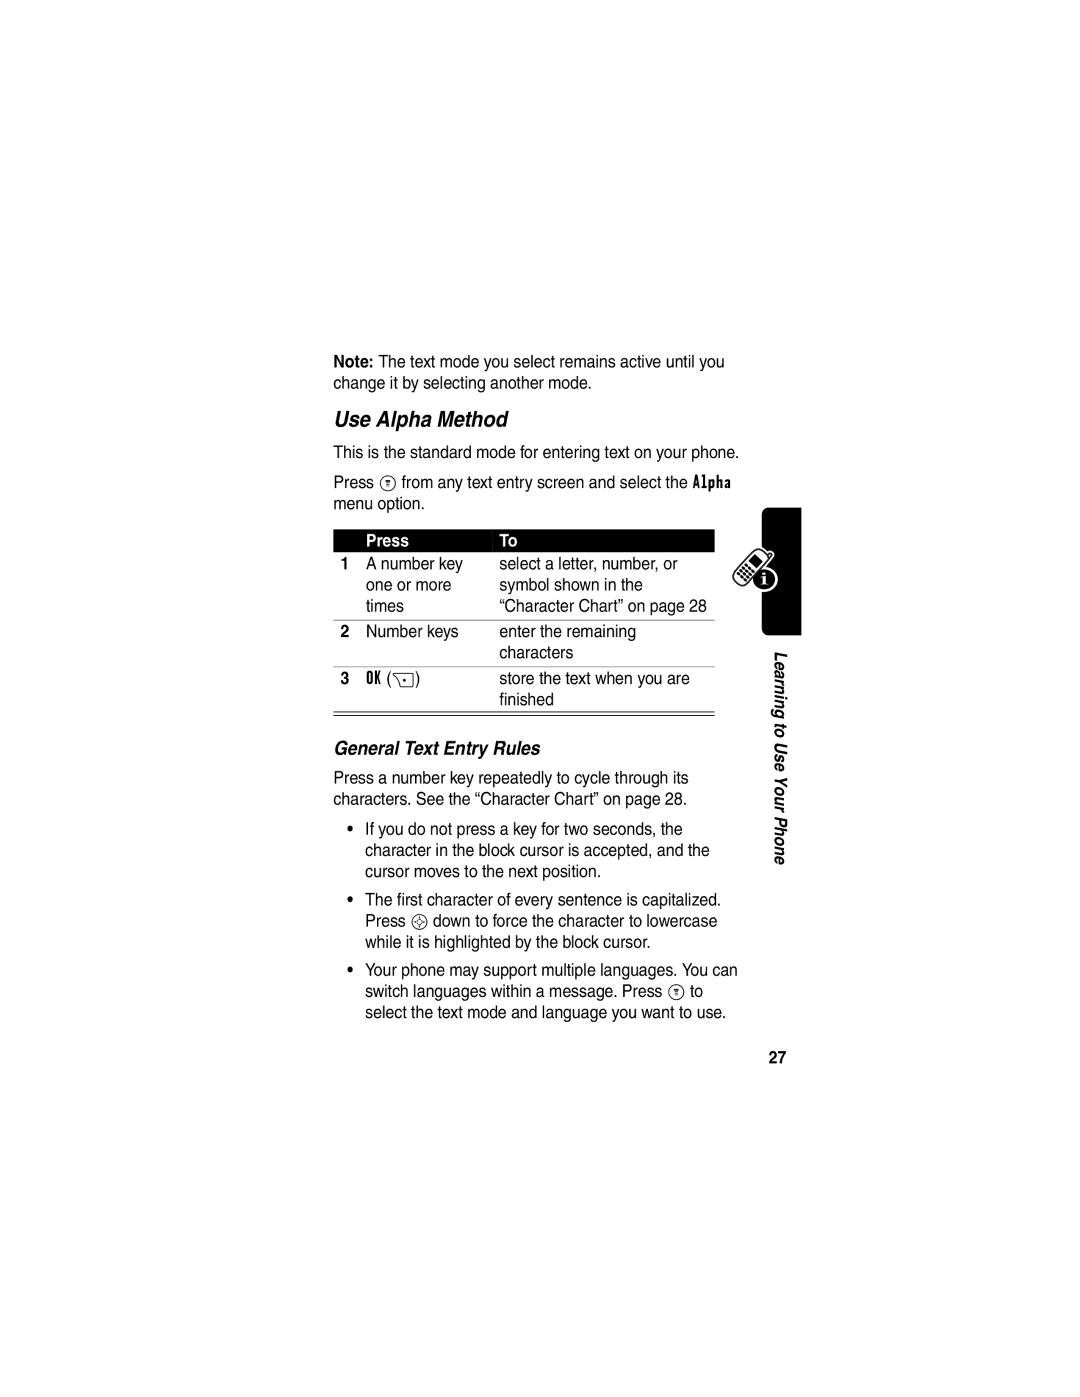 Motorola C353 manual Use Alpha Method, General Text Entry Rules 